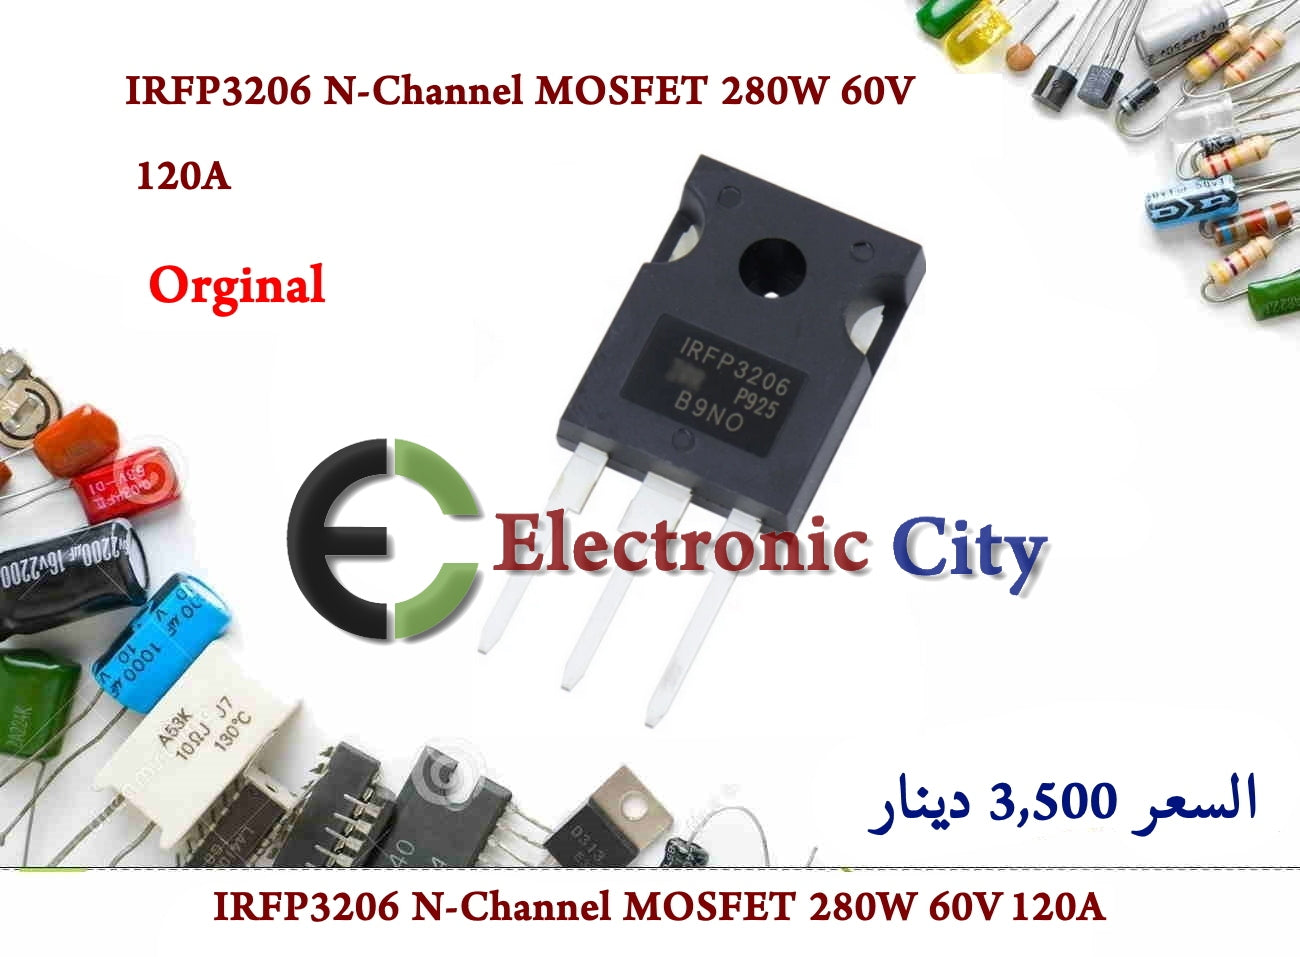 IRFP3206 N-Channel MOSFET 280W 60V 120A